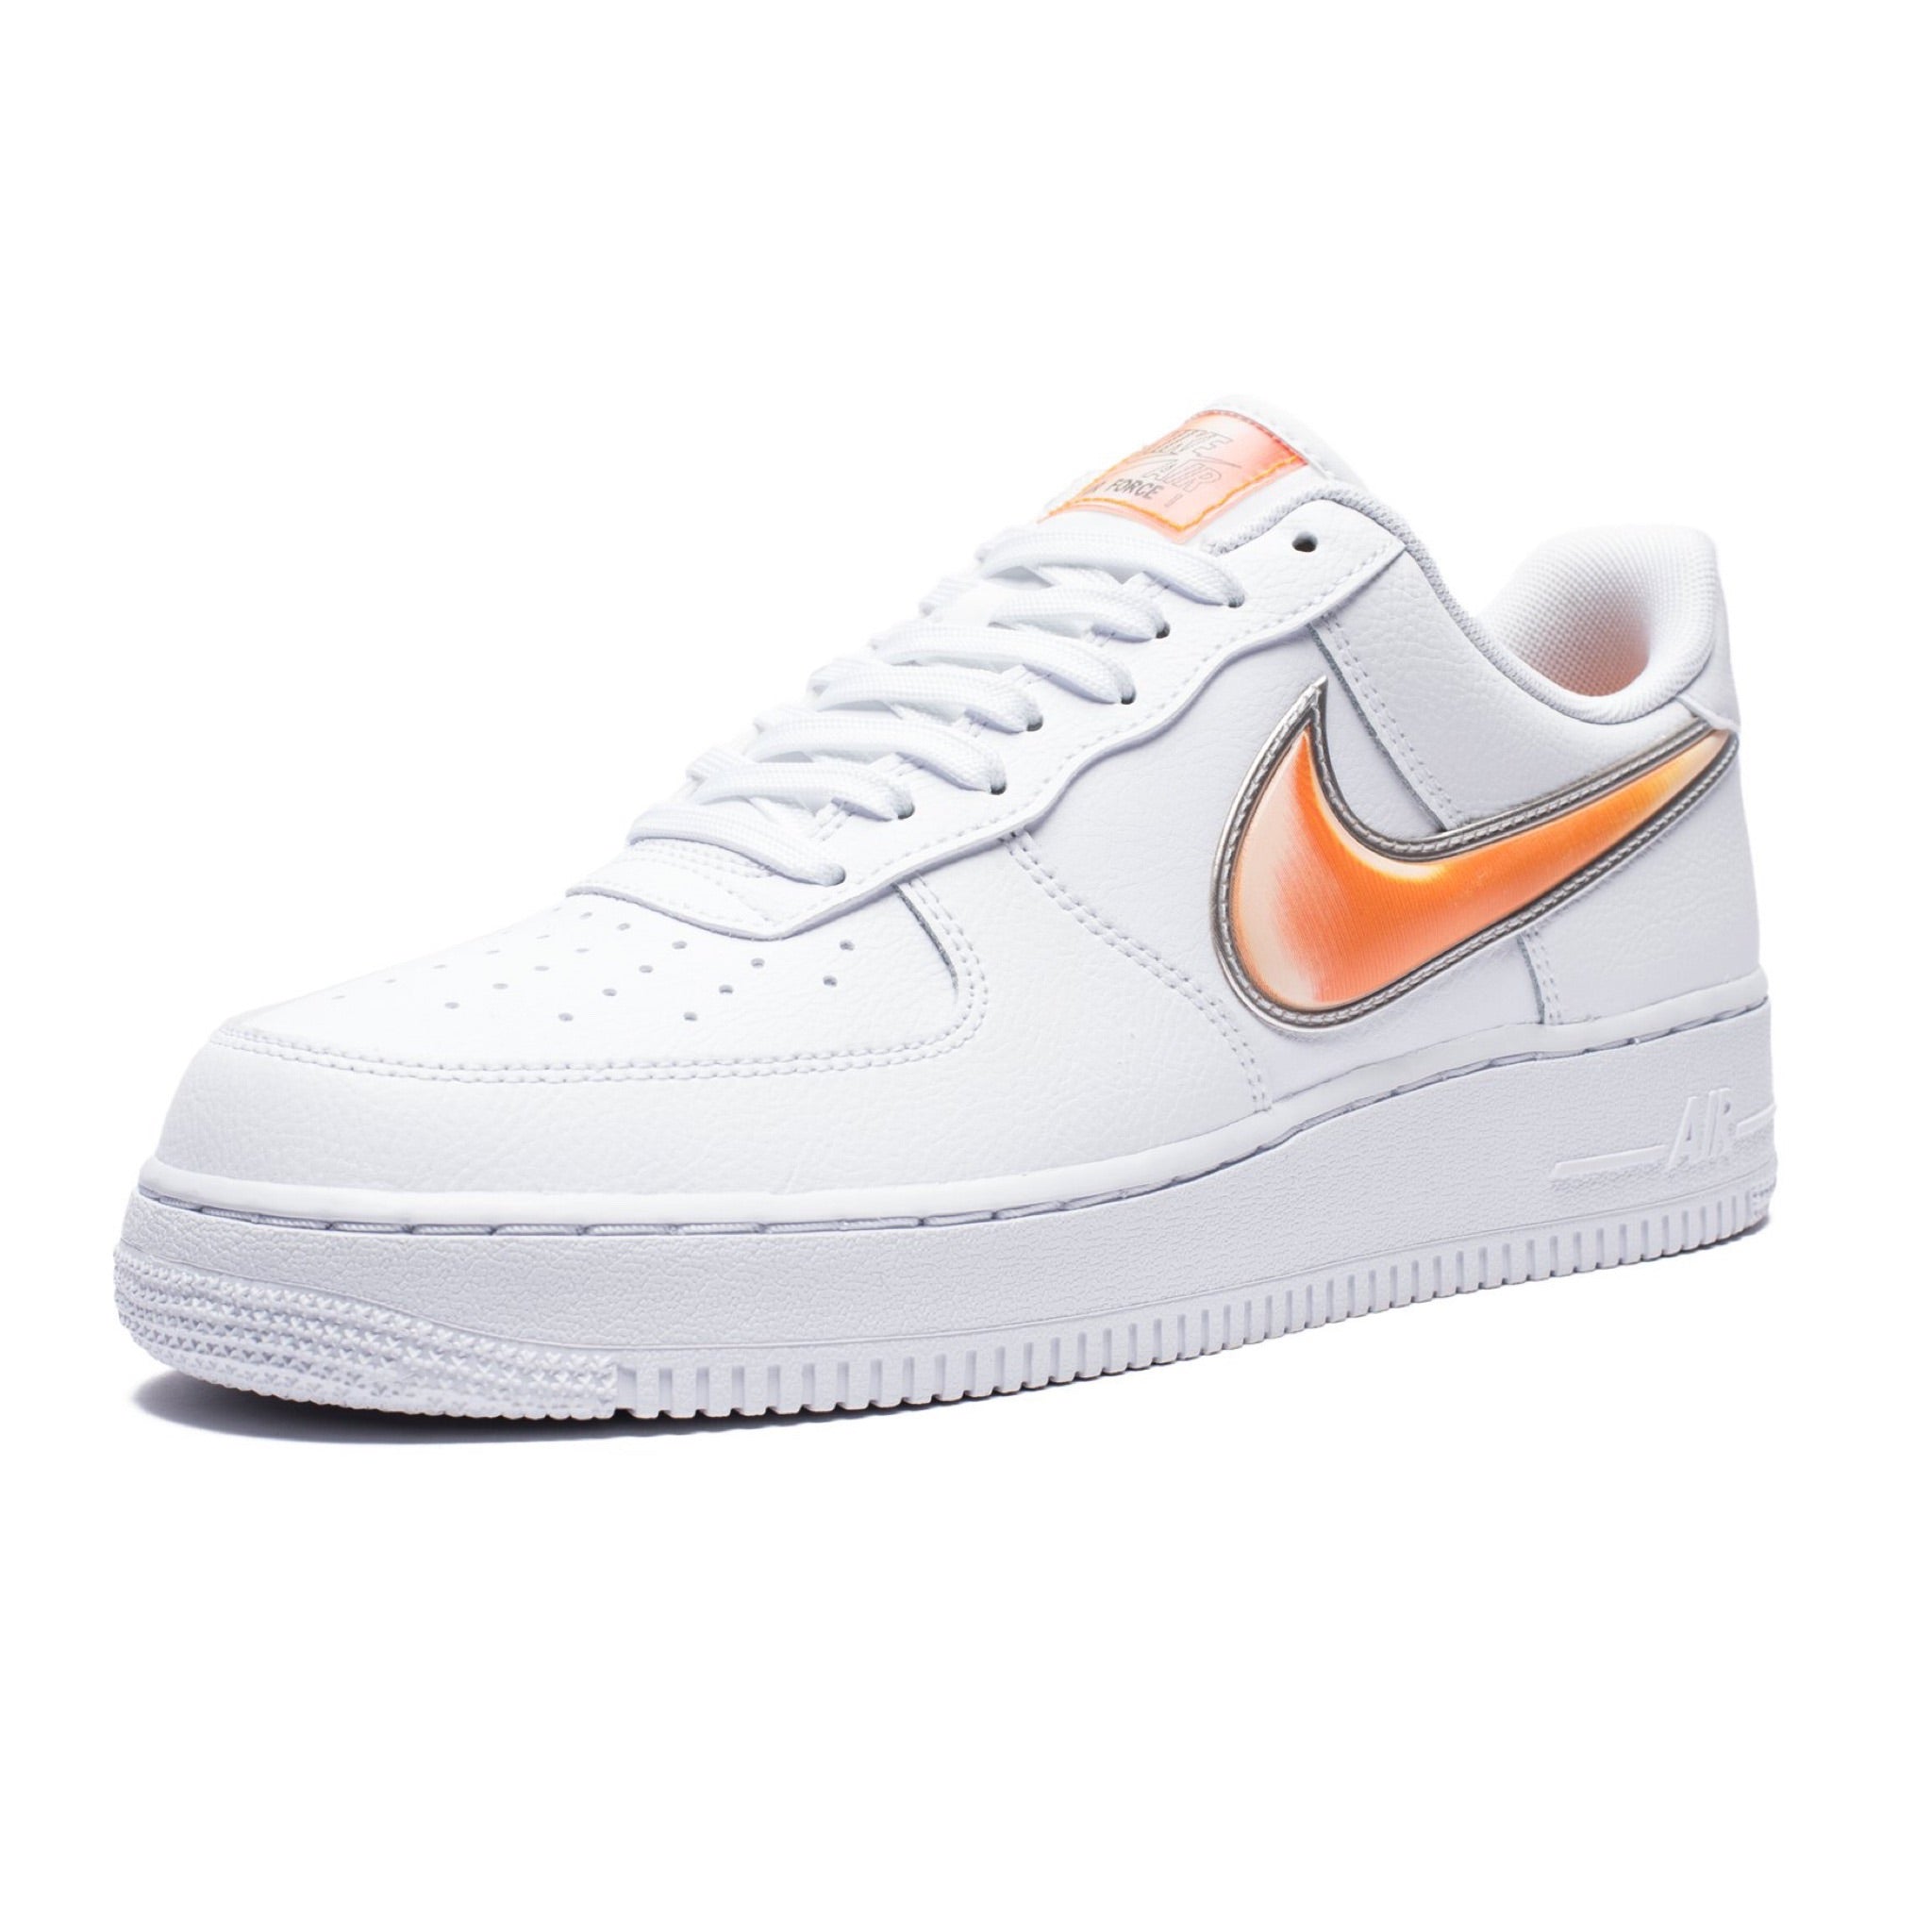 Nike Air Force 1 LV8 Shoes White/Orange Peel Size 11